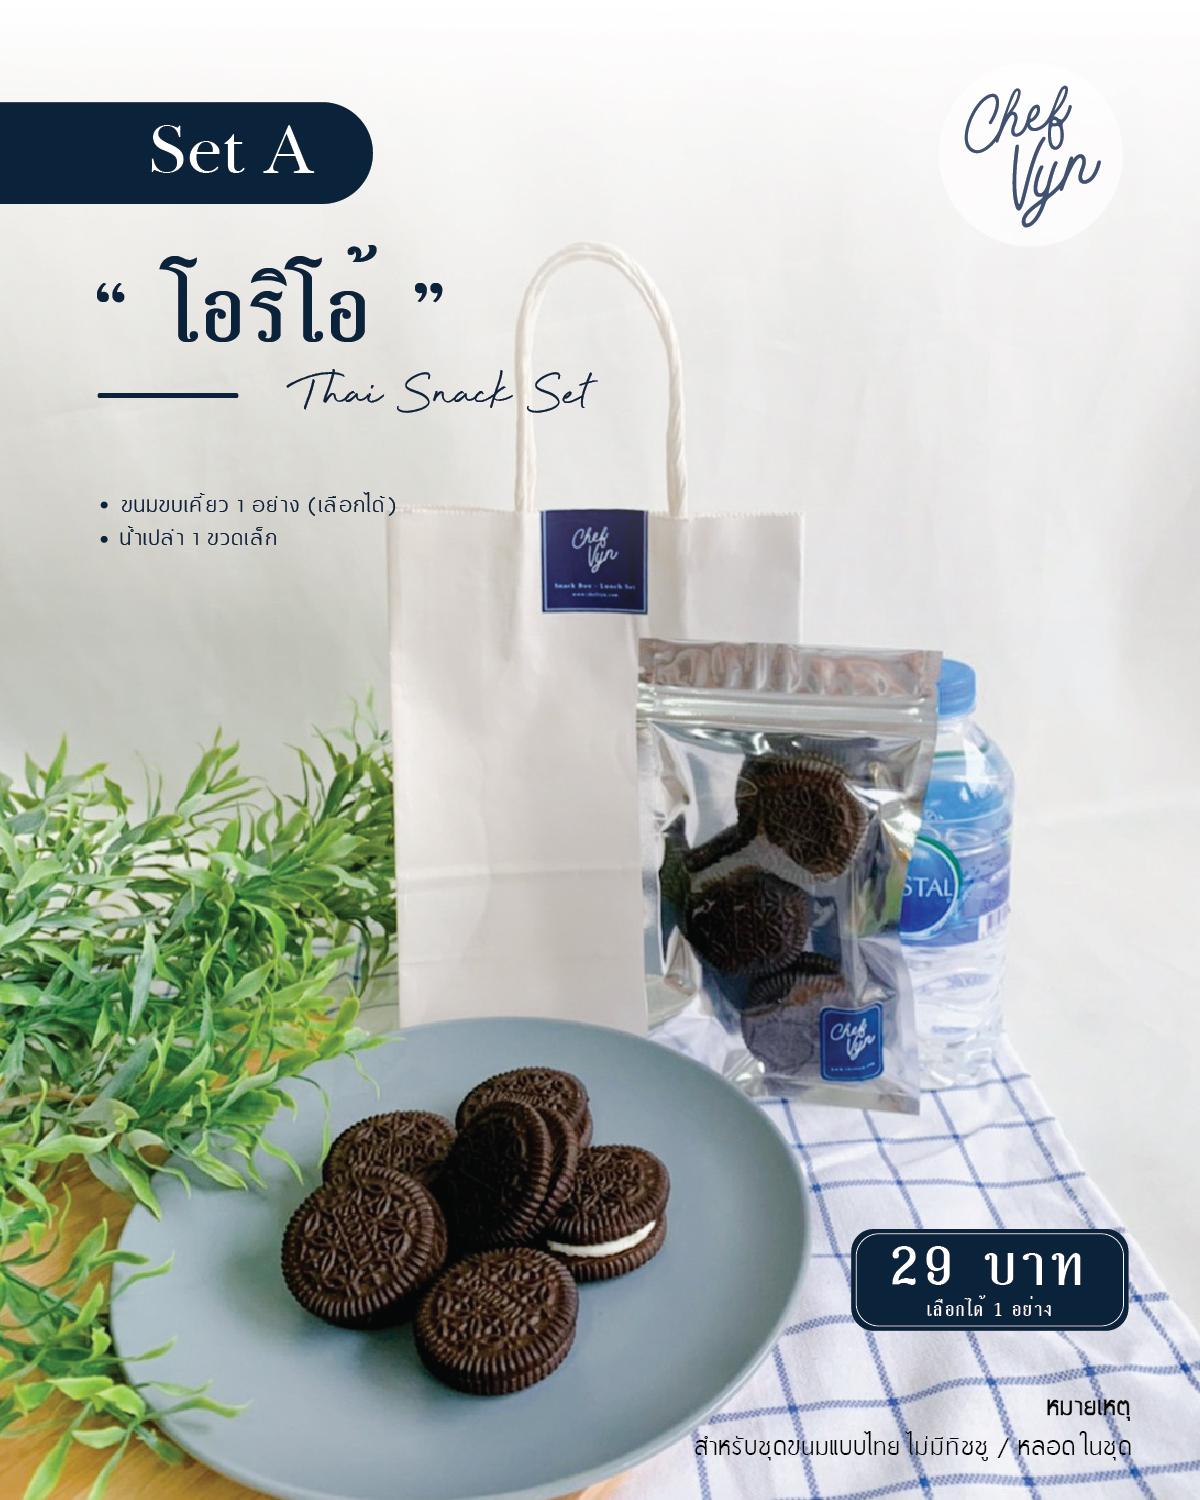 Thai Snack ขนม 1 อย่างพร้อมน้ำและถุง SetA 05